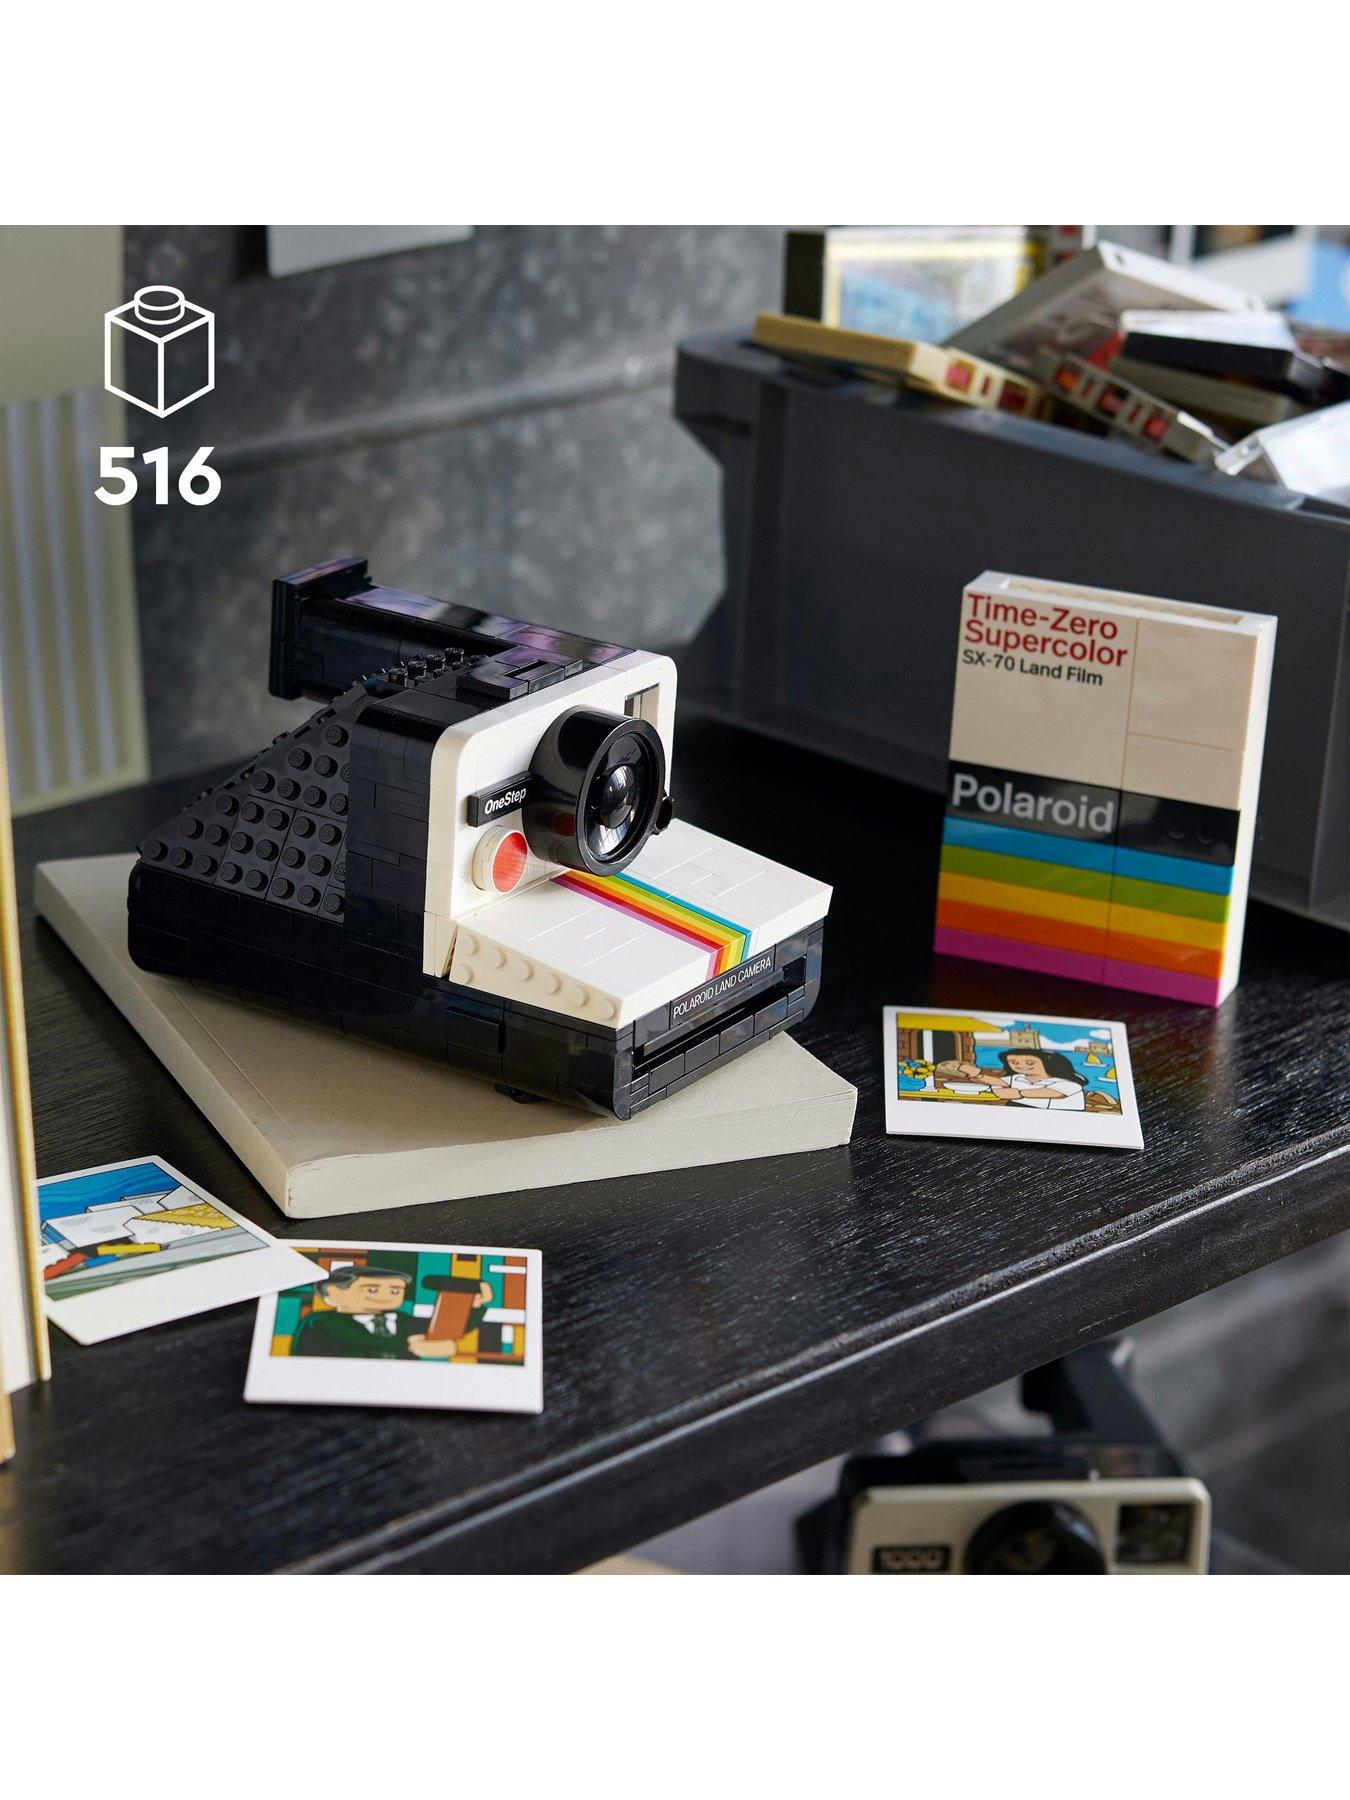 Polaroid OneStep SX-70 Camera Set 21345